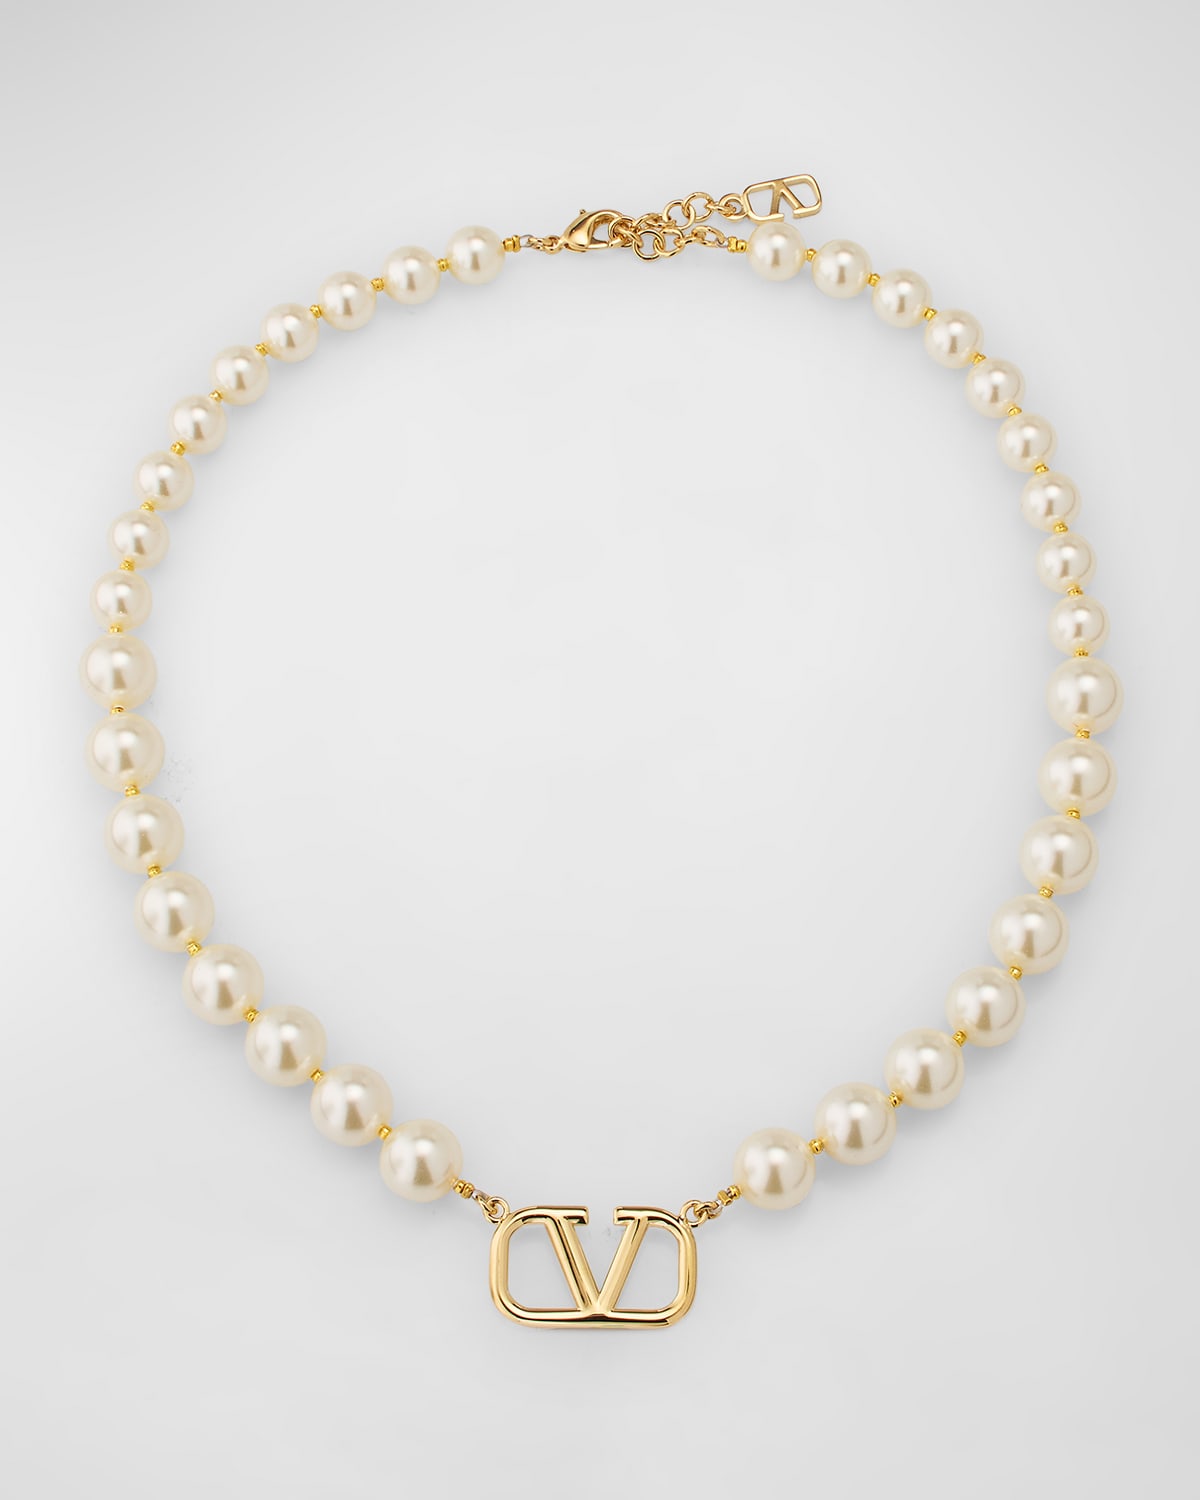 VLogo Signature Metal Necklace with Swarovski Pearls